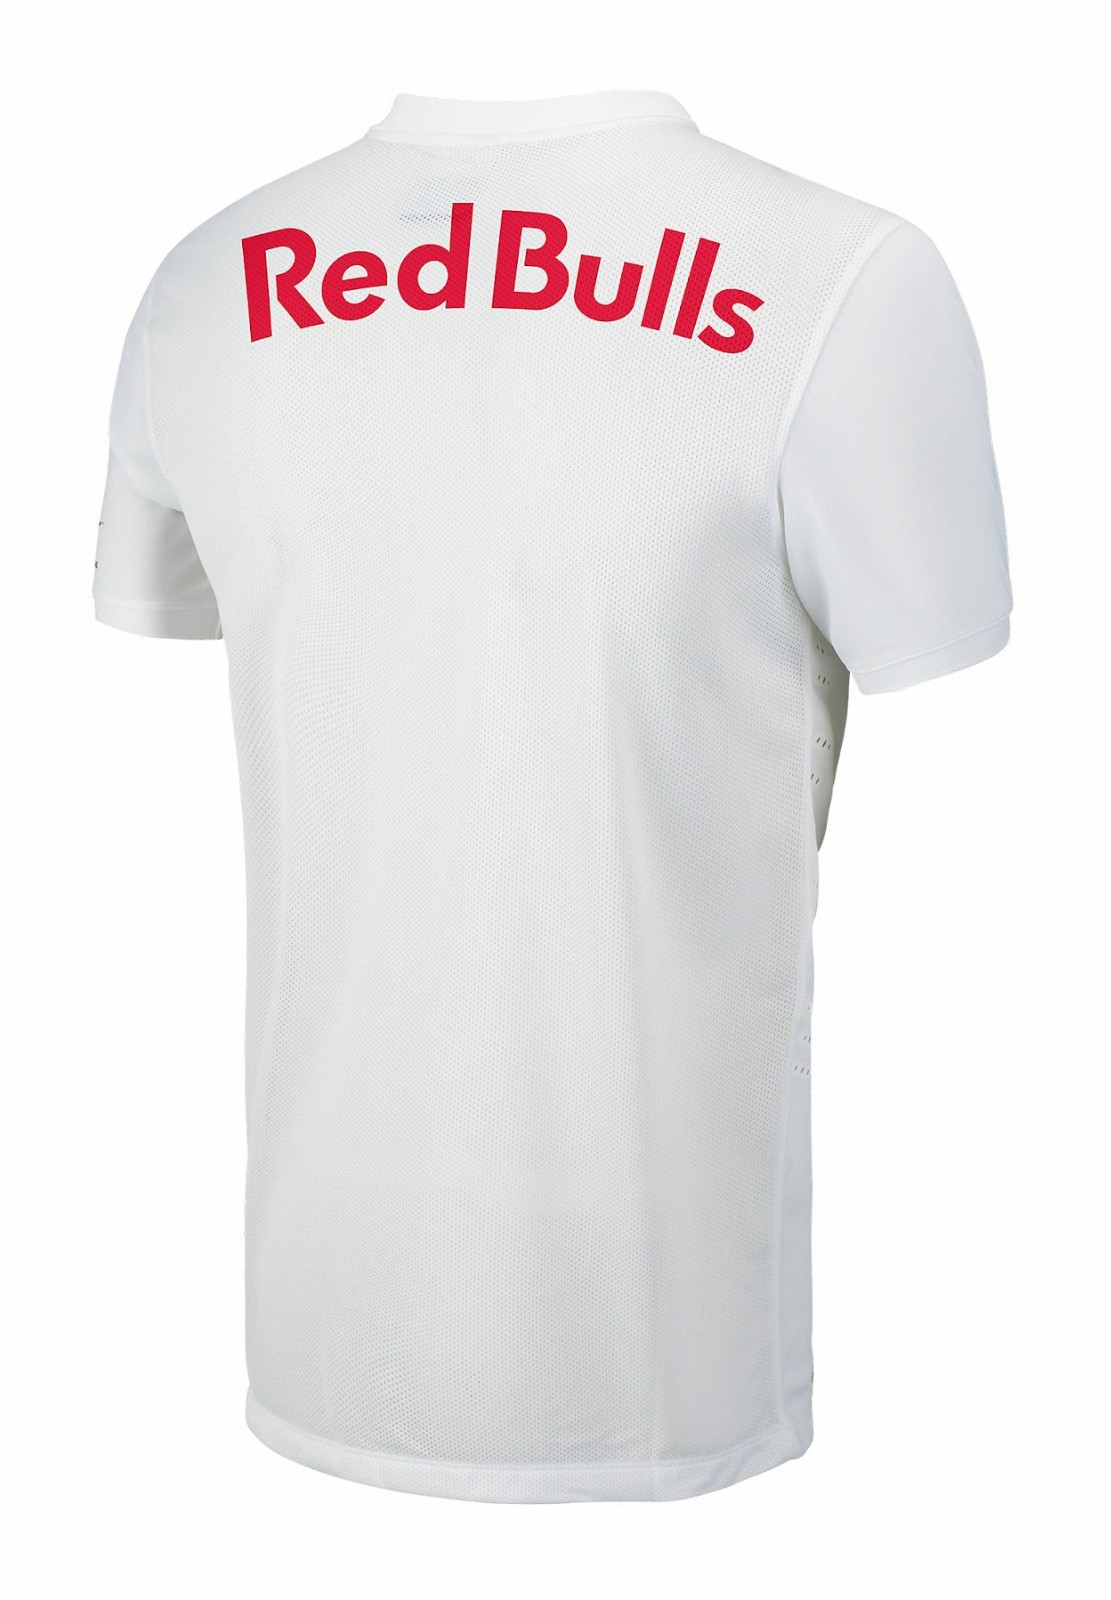 Red Bull Salzburg 2014-15 Home Kit